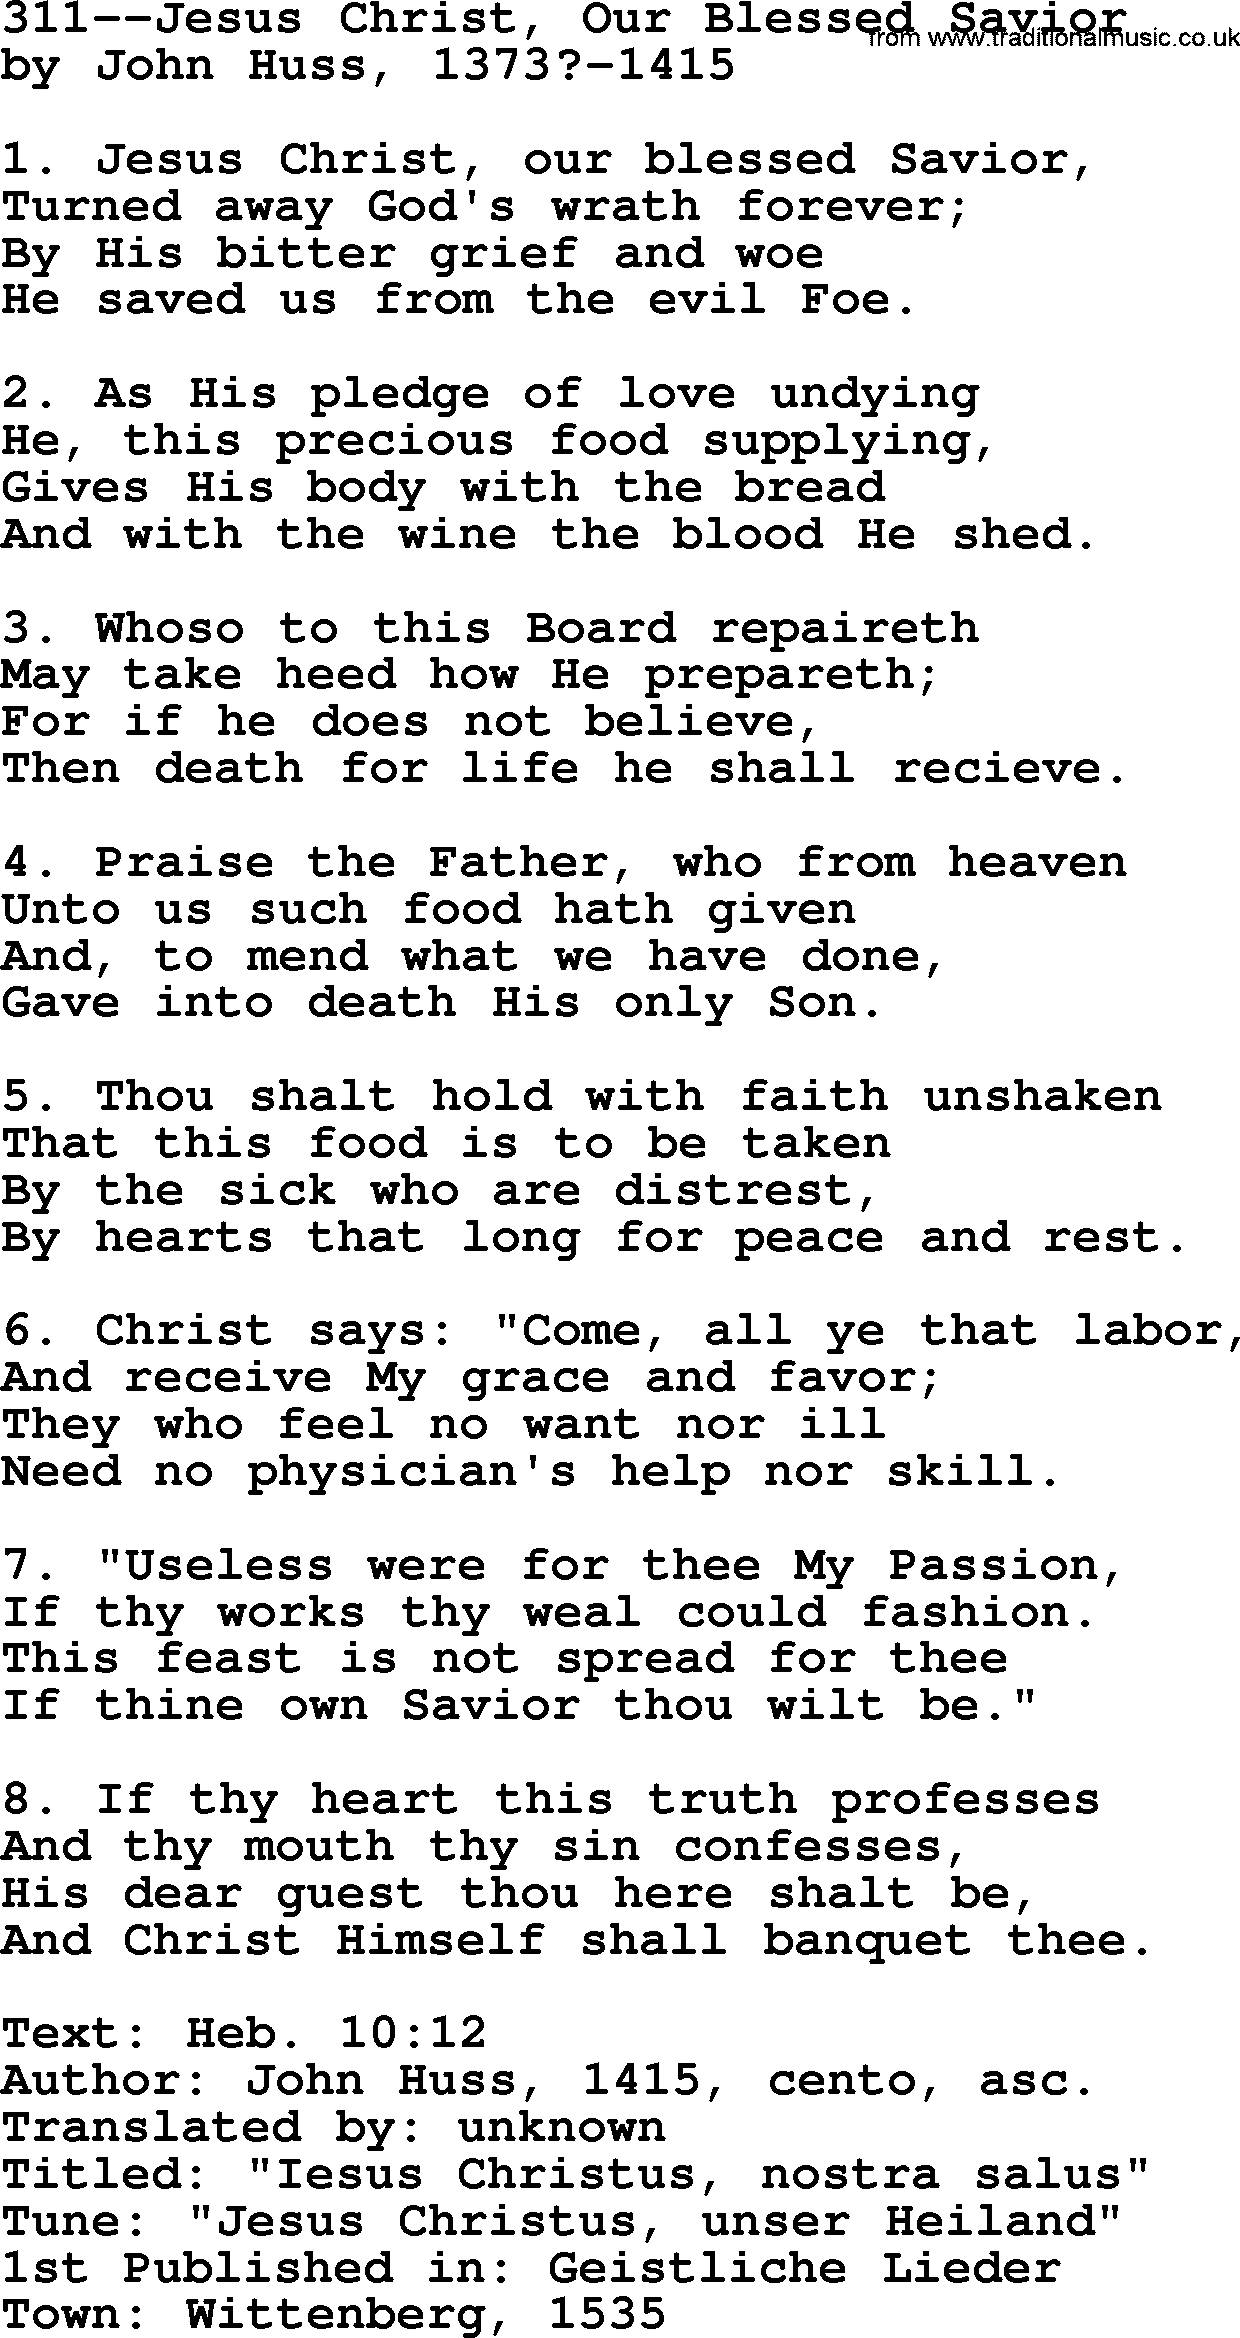 Lutheran Hymn: 311--Jesus Christ, Our Blessed Savior.txt lyrics with PDF